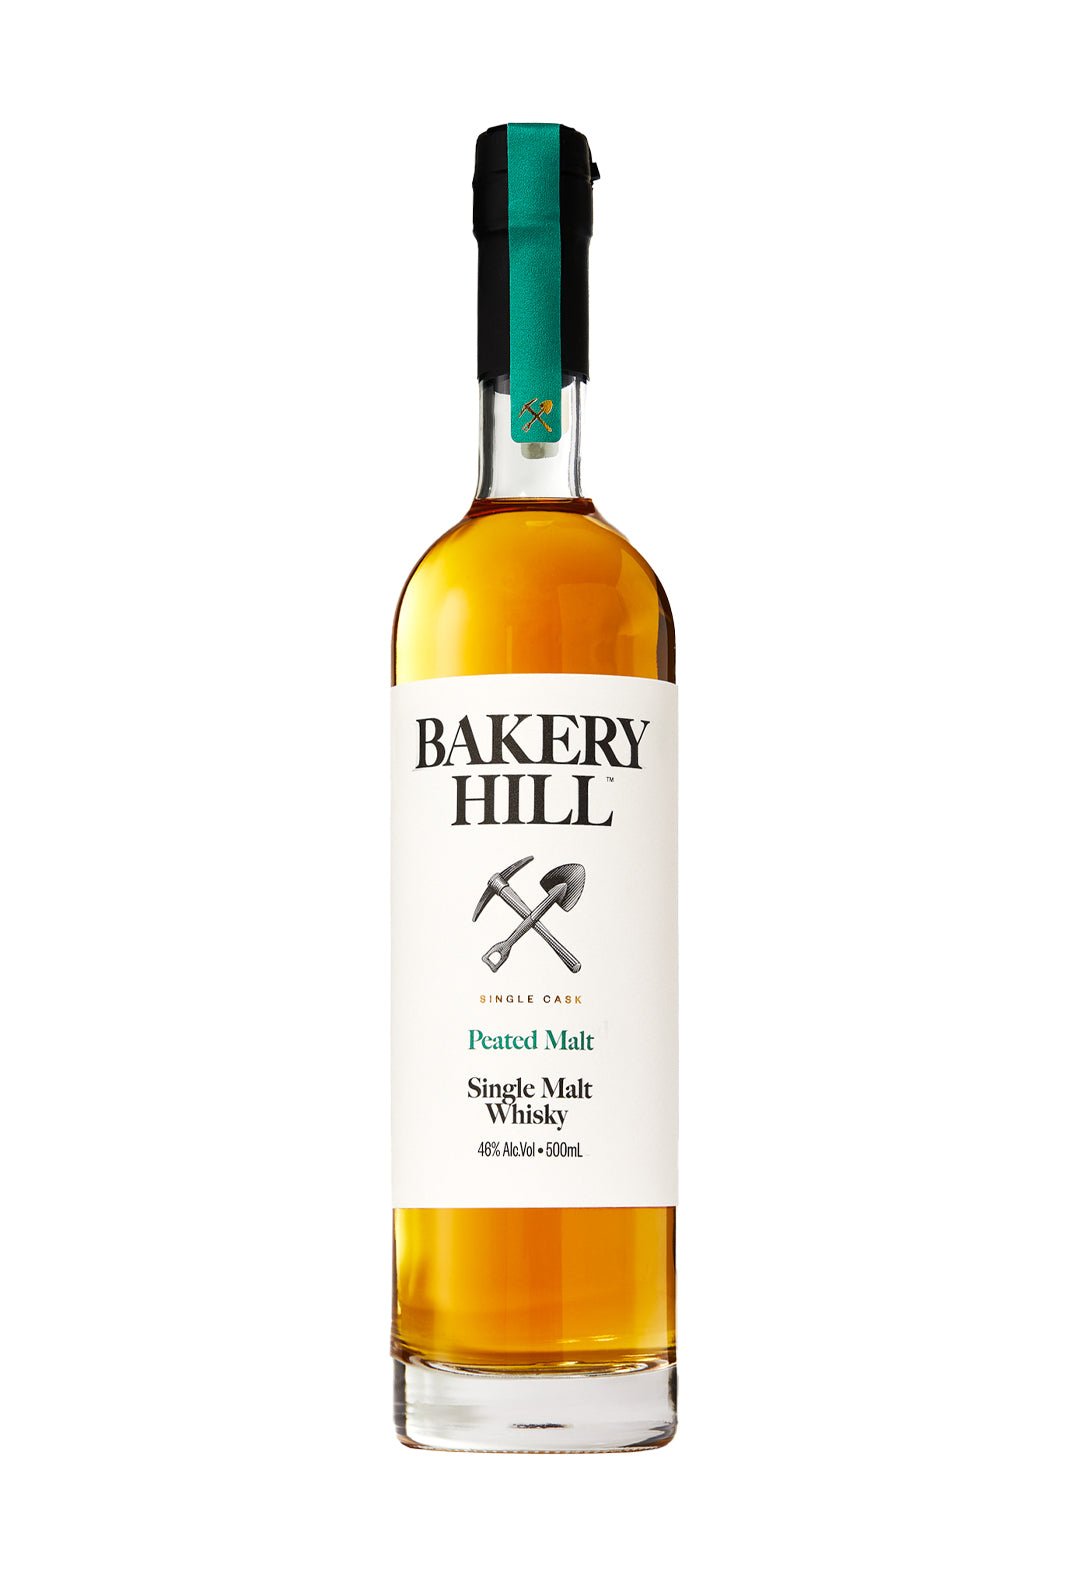 Bakery Hill Peated Single Malt Whisky 46% 500ml | Whisky | Shop online at Spirits of France